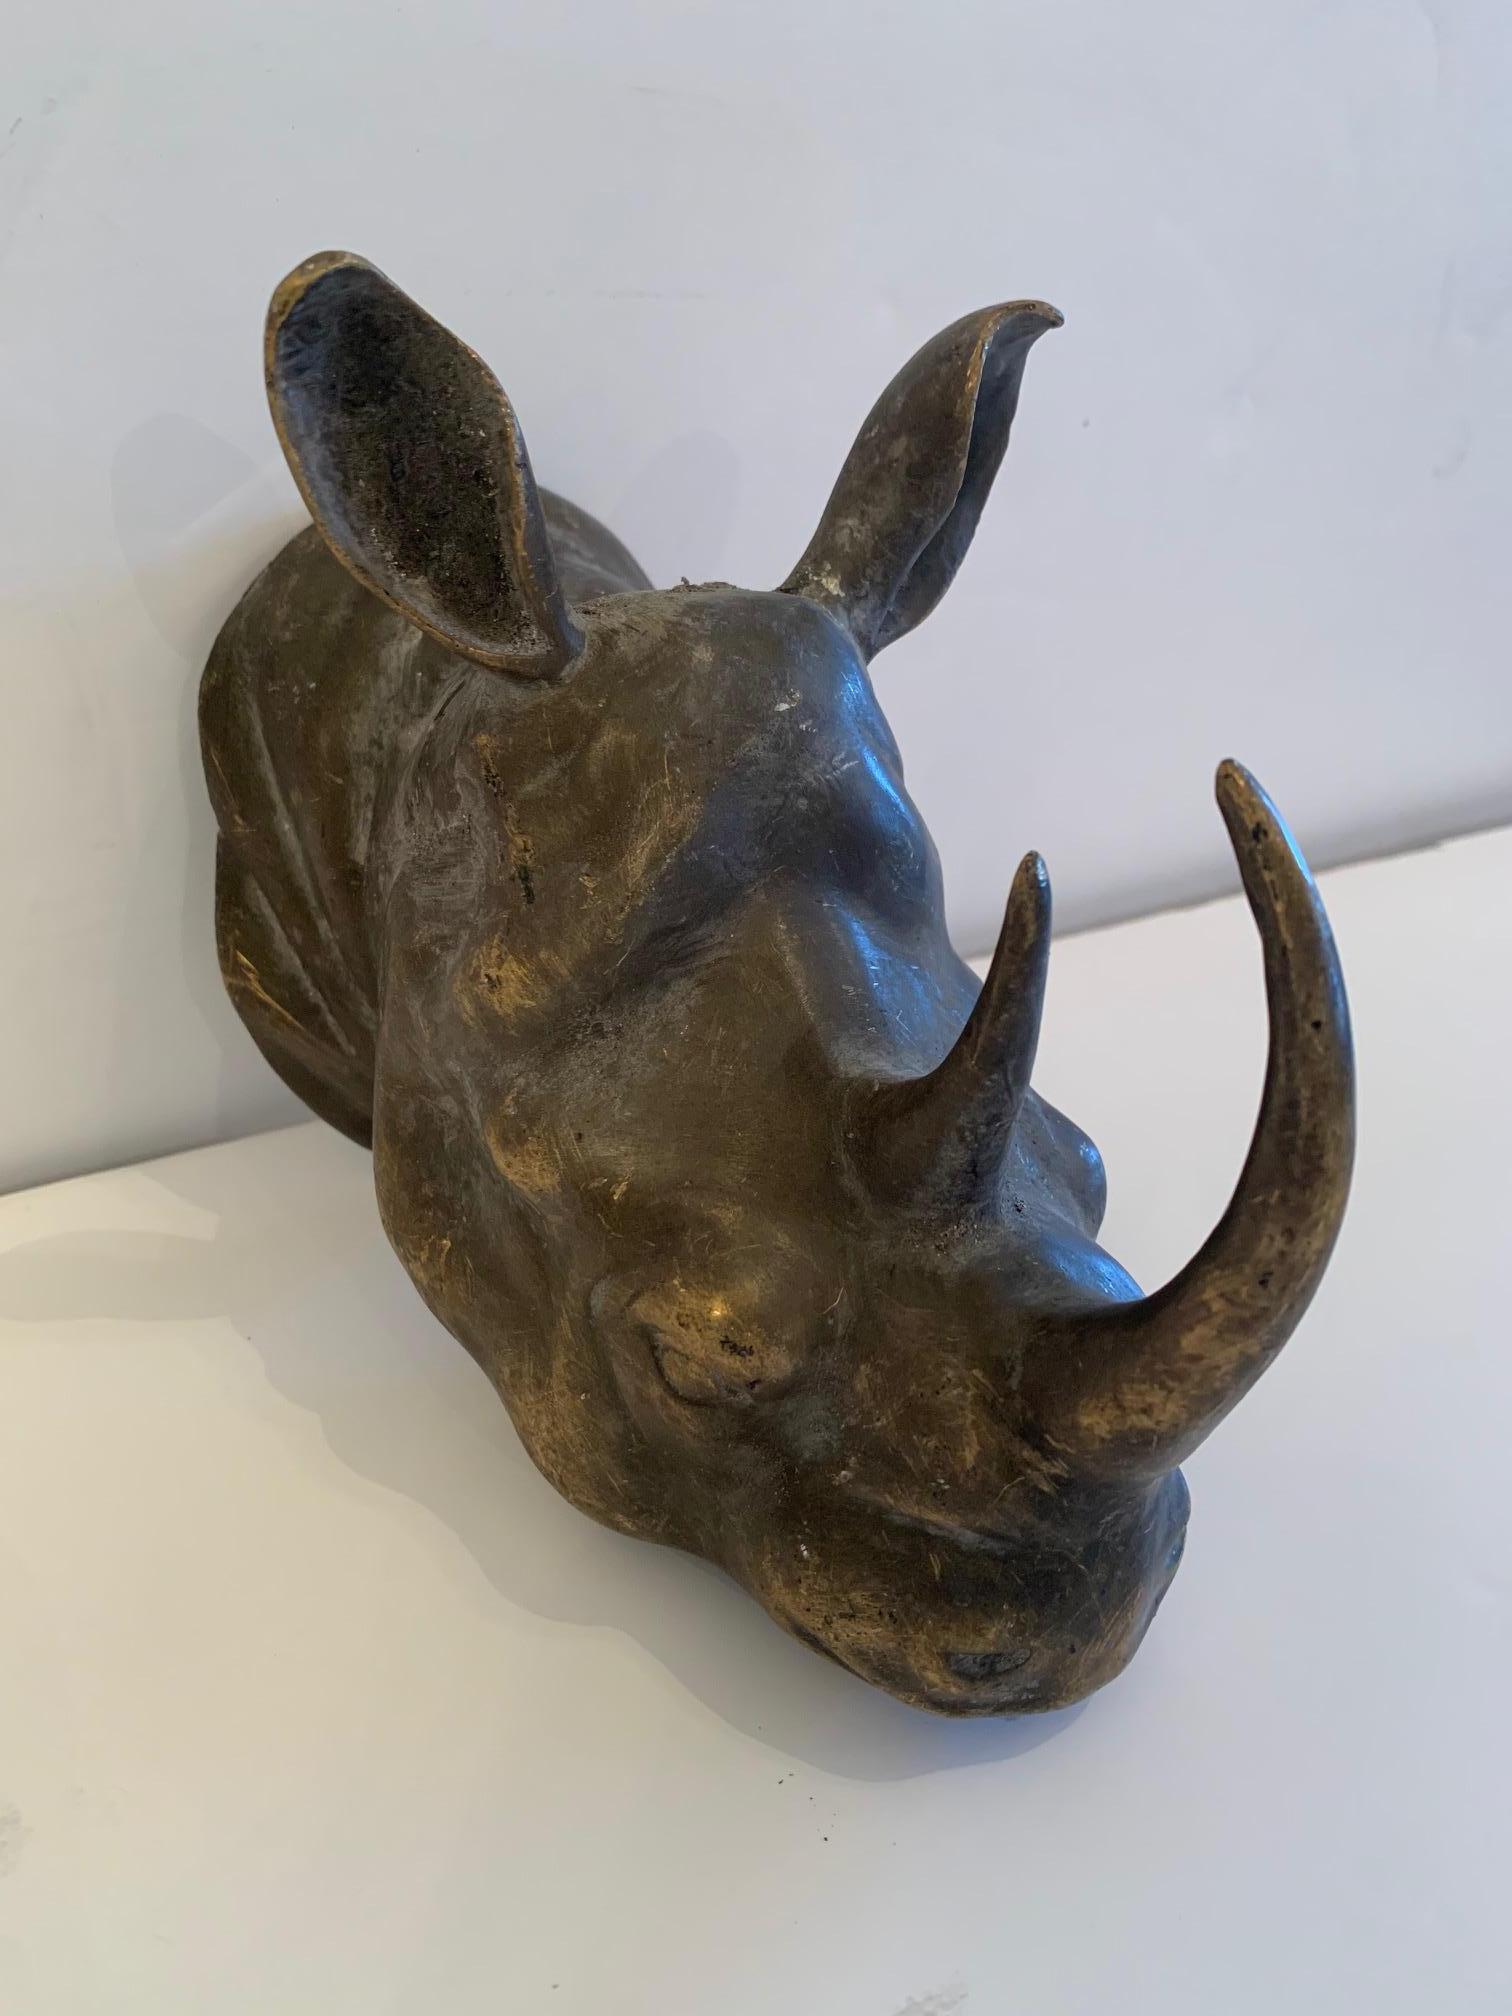 An unexpected wonderful little bronze wall sculpture of a rhino head.